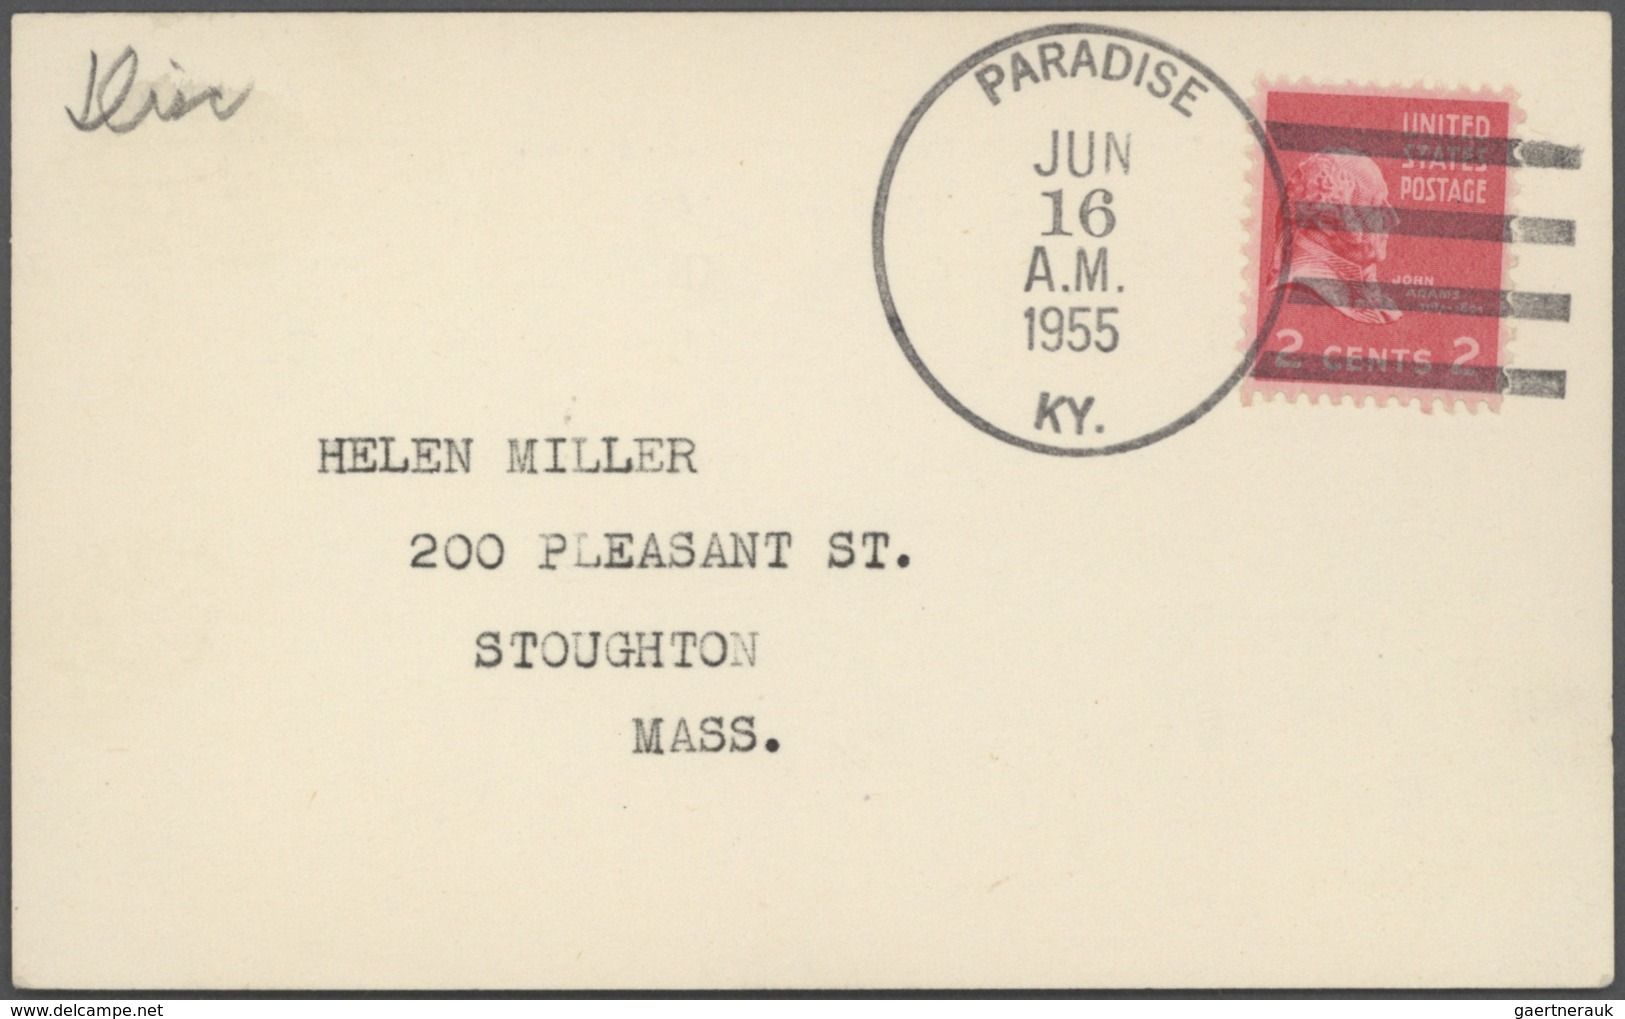 Vereinigte Staaten von Amerika: 1830-1970 (c.): More than 1000 covers, postcards, postal stationery